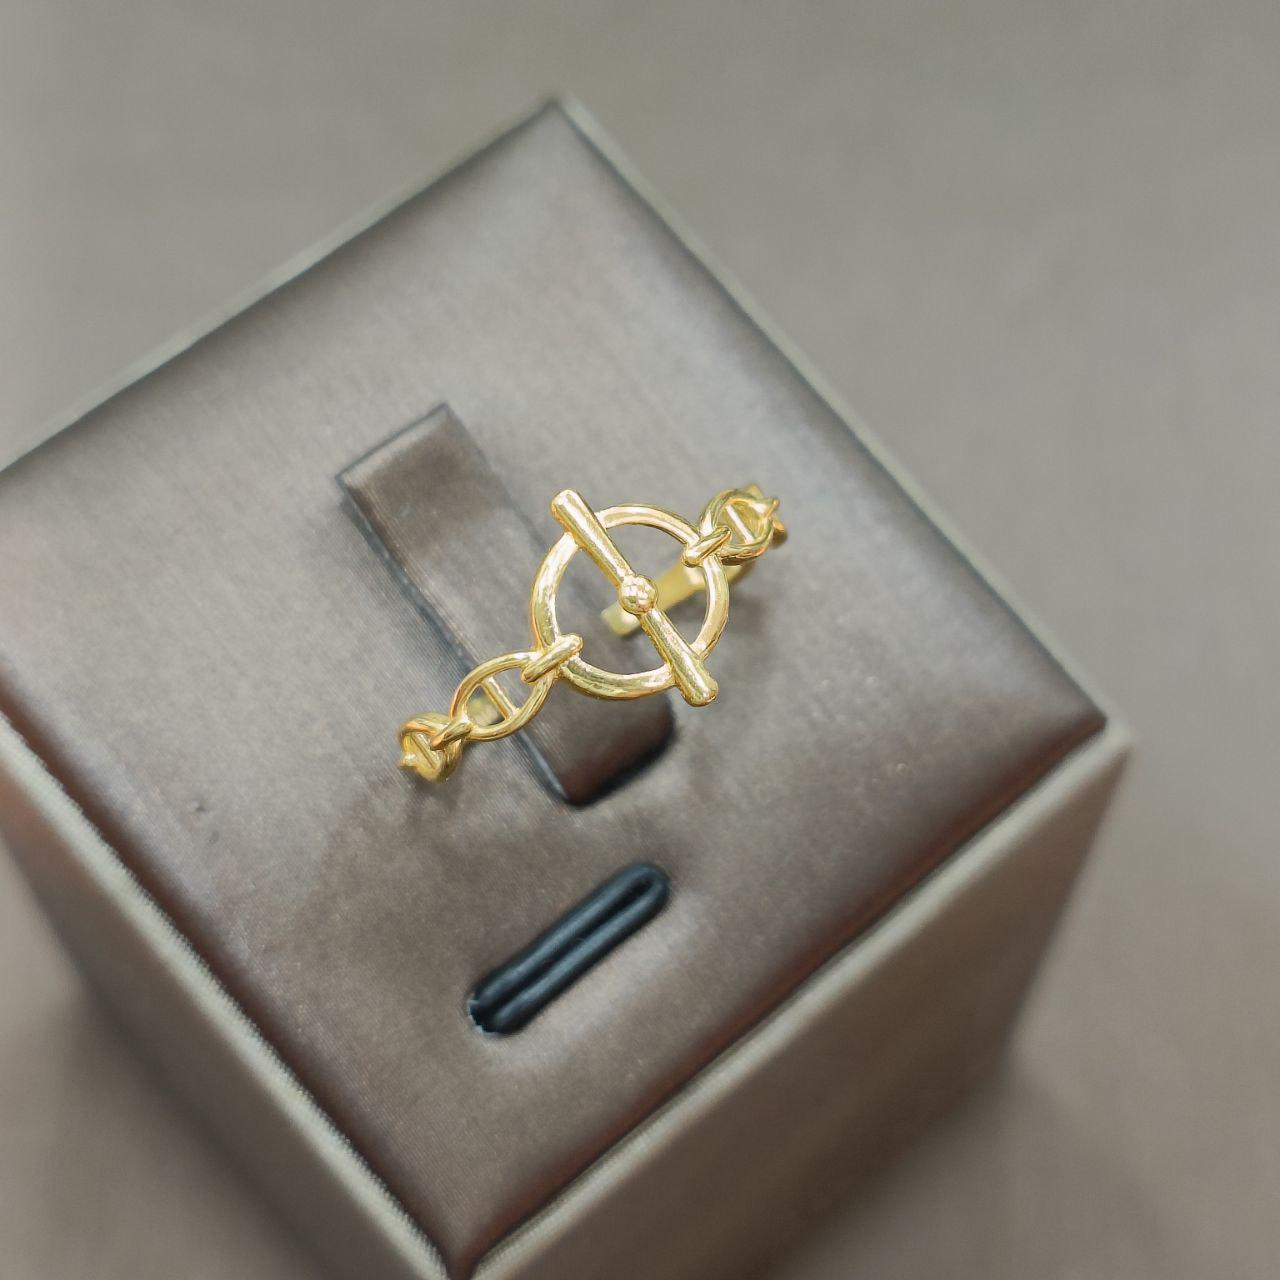 22k / 916 Gold H and T Design Ring-916 gold-Best Gold Shop